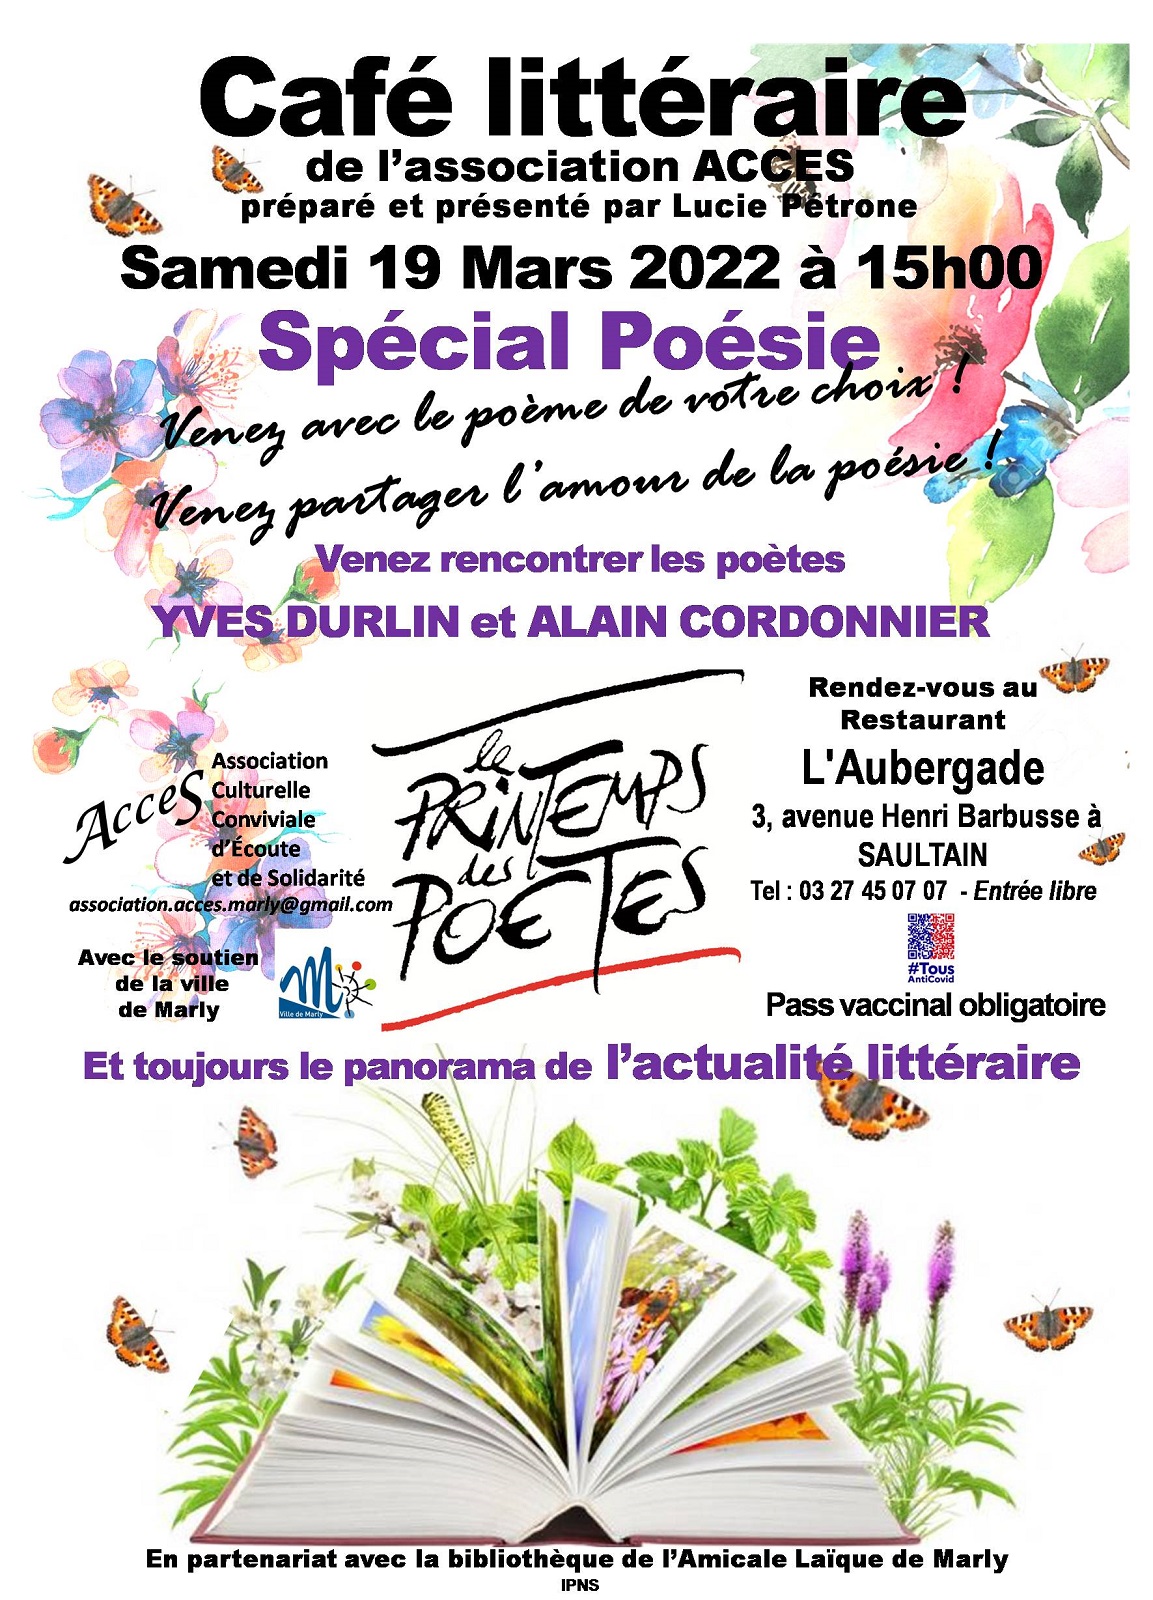 Saultain Cafe Litteraire Special Poesie Le 19 Mars Scaldis Fr